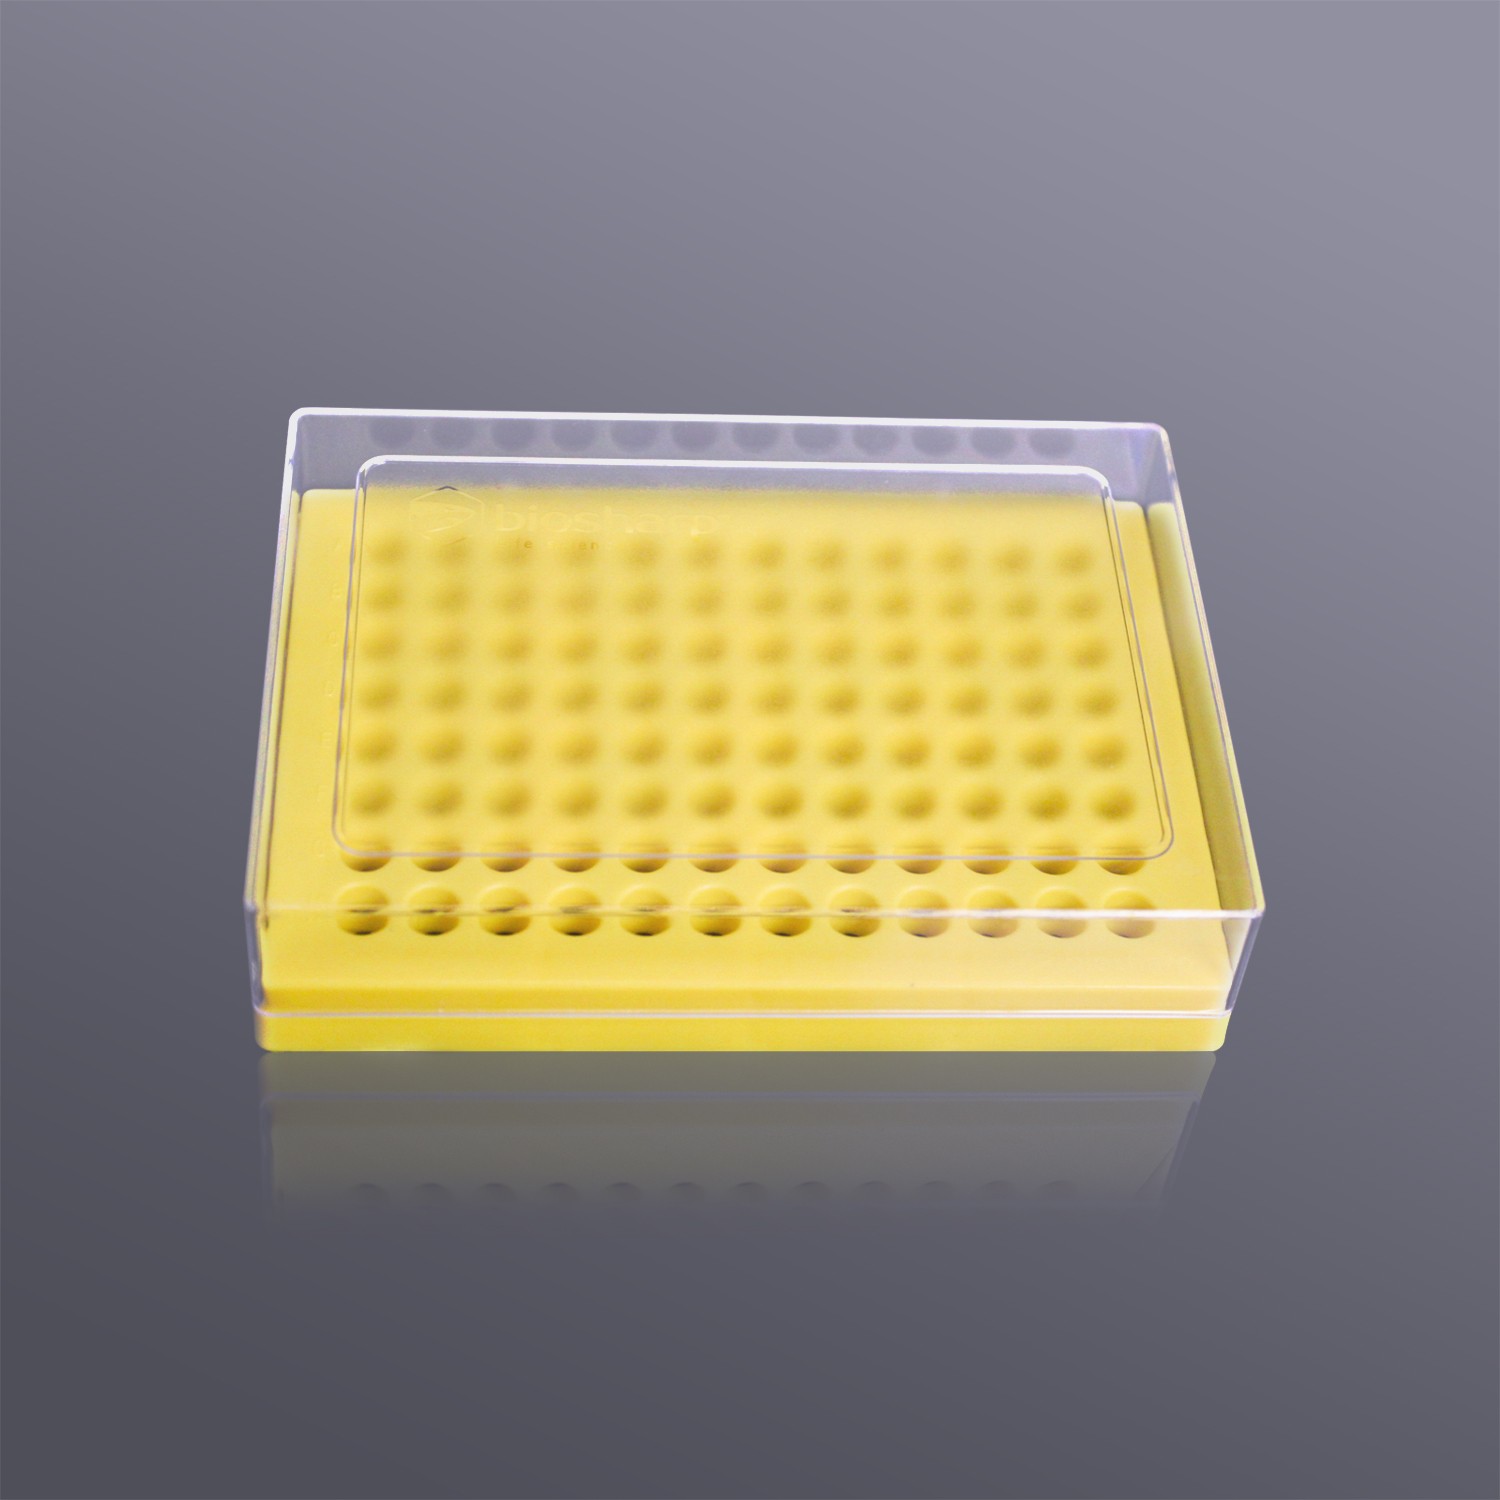 0.2ml薄壁管盒(PC),黄色